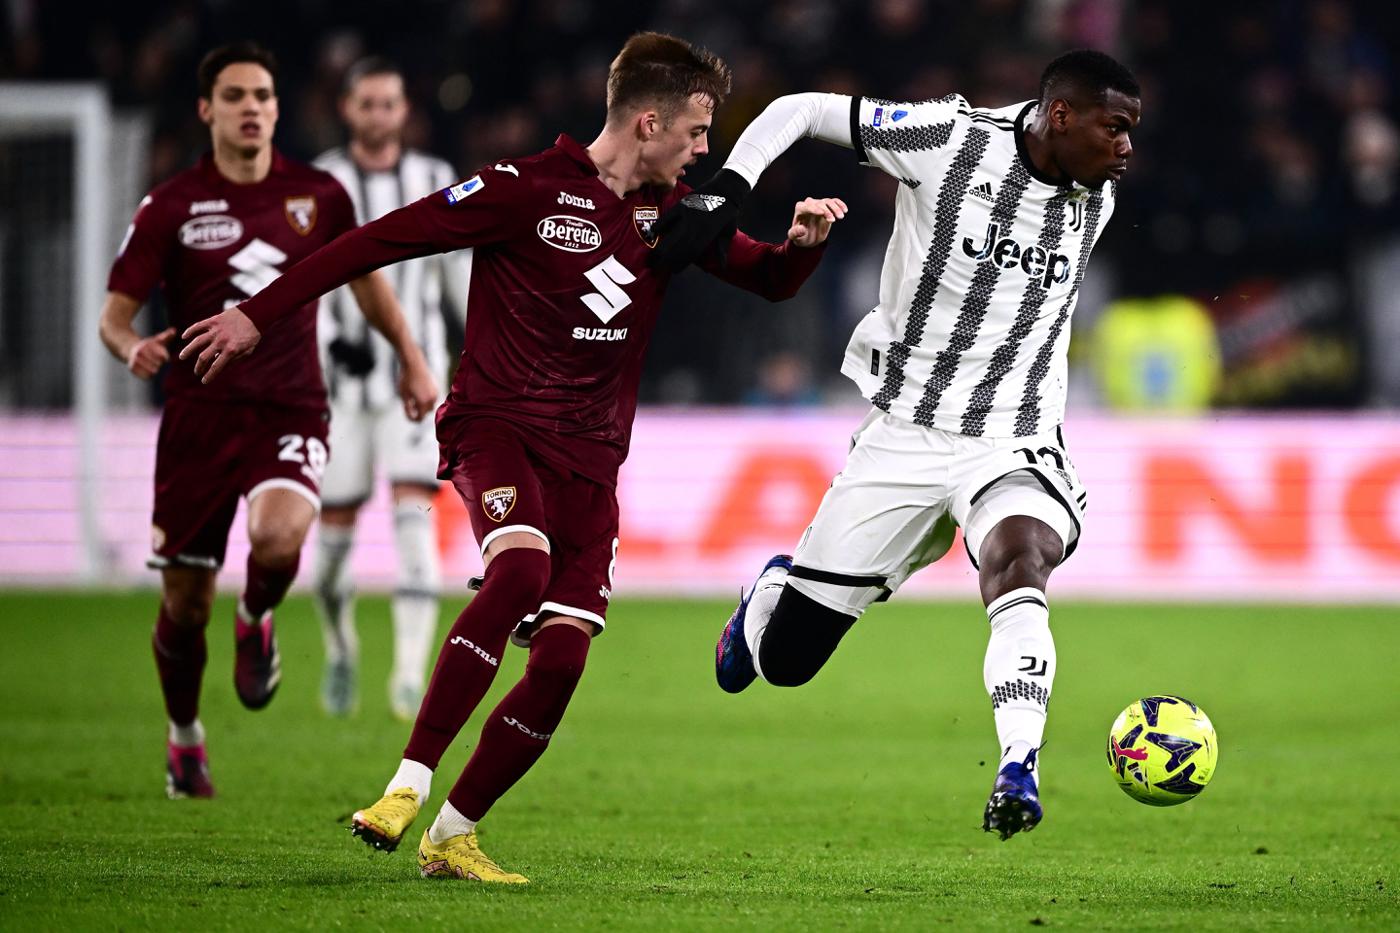 Juventus - Torino - 4:2. Italian Championship, round 24. Match review, statistics.